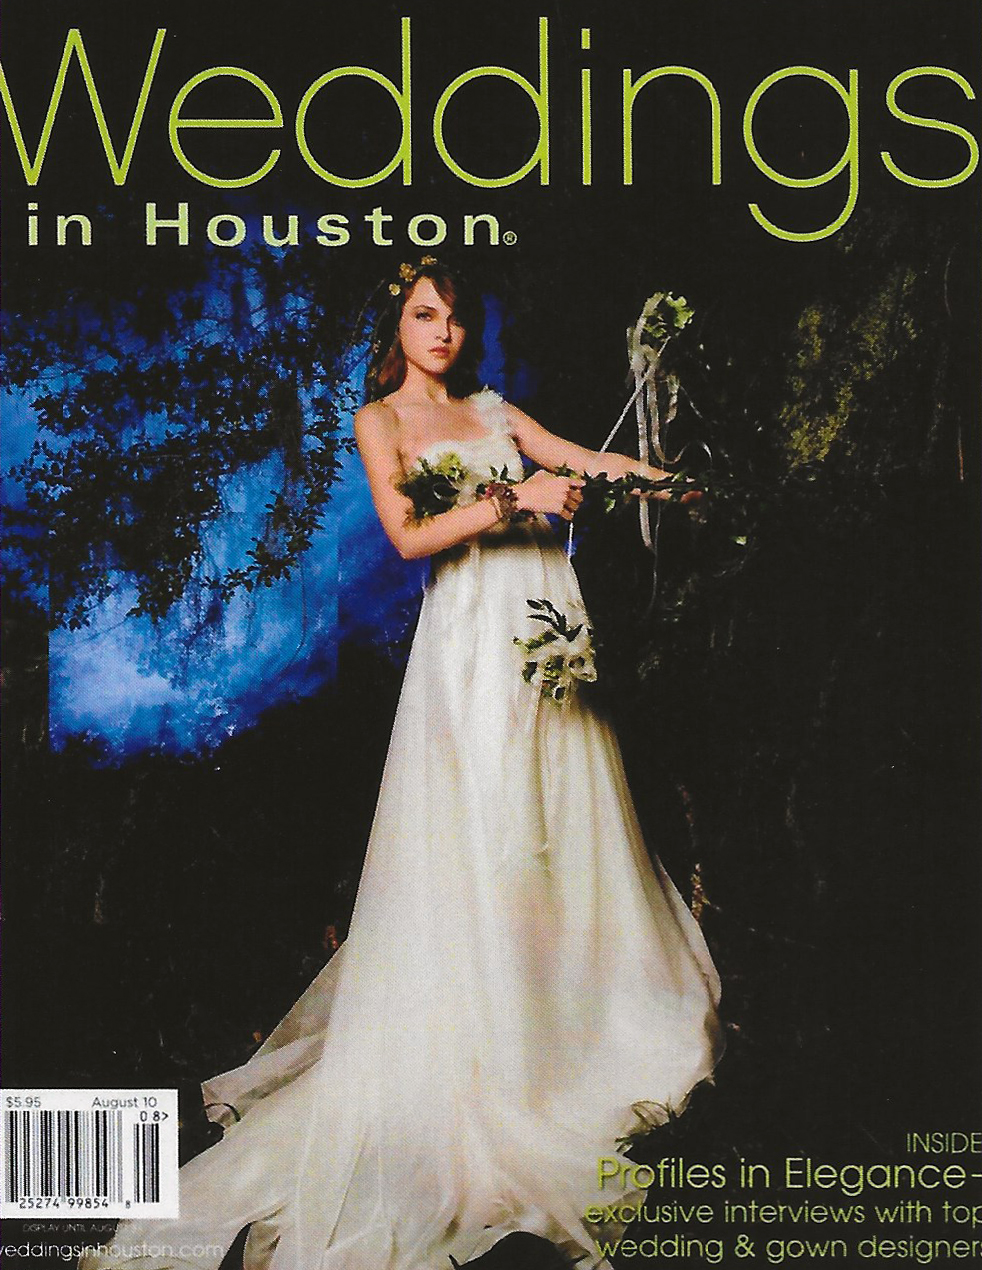 Steve Kemble Press, Weddings in Houston